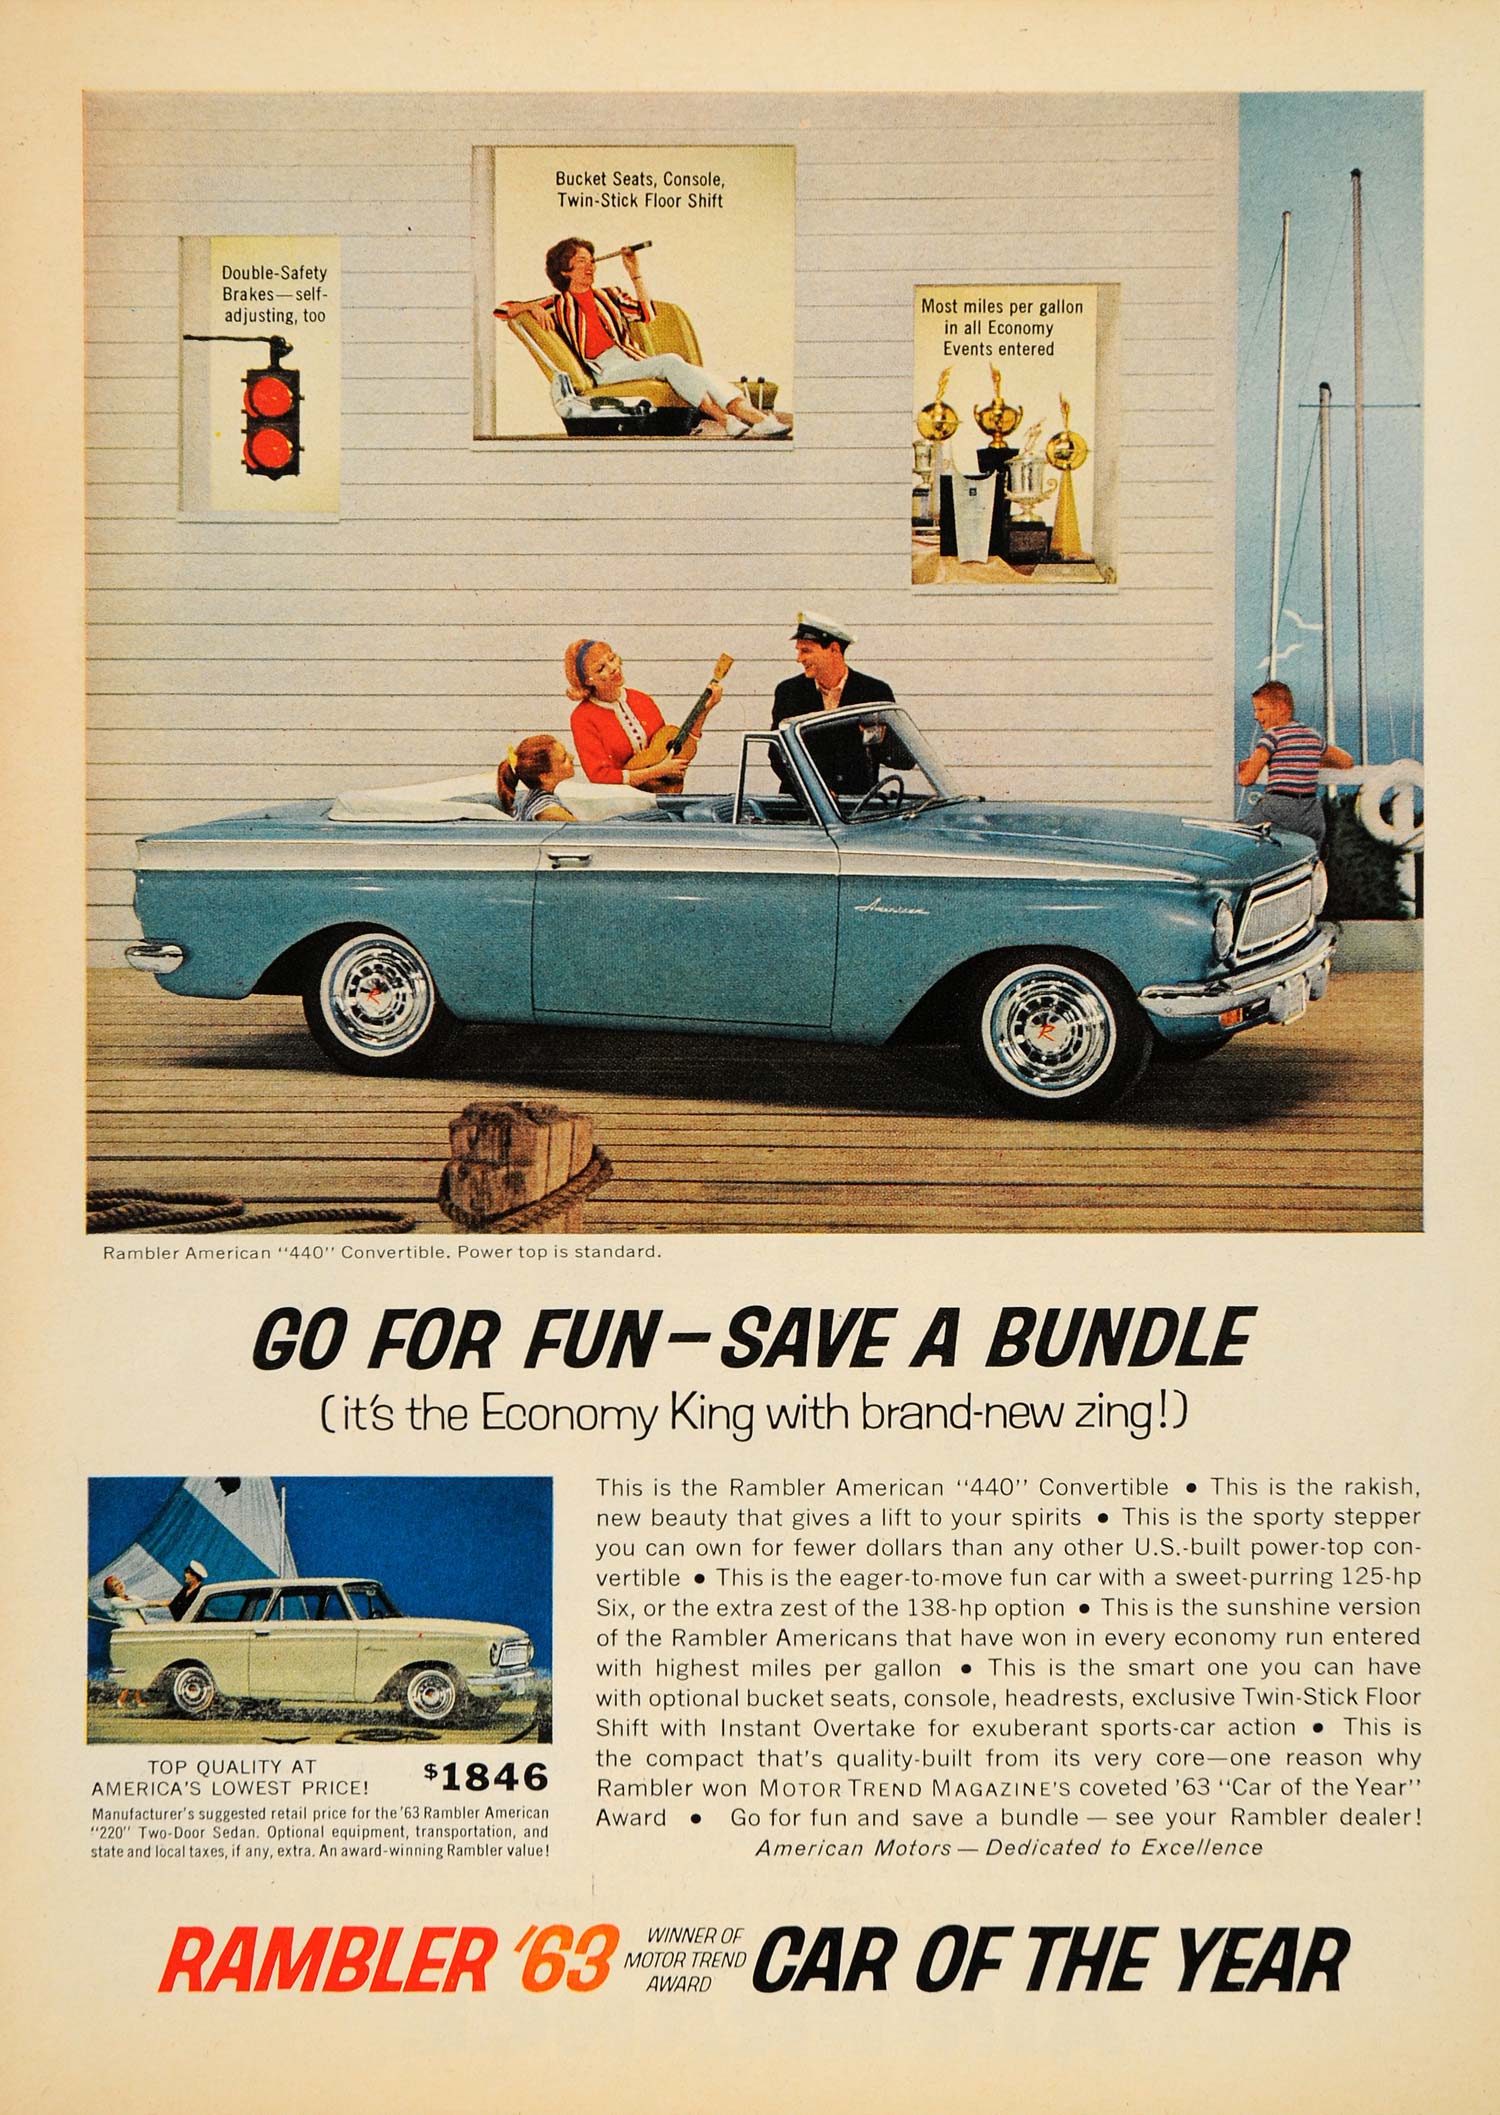 1963 Ad Vintage Rambler American 440 Convertible Car - ORIGINAL ADVERTISING TM3